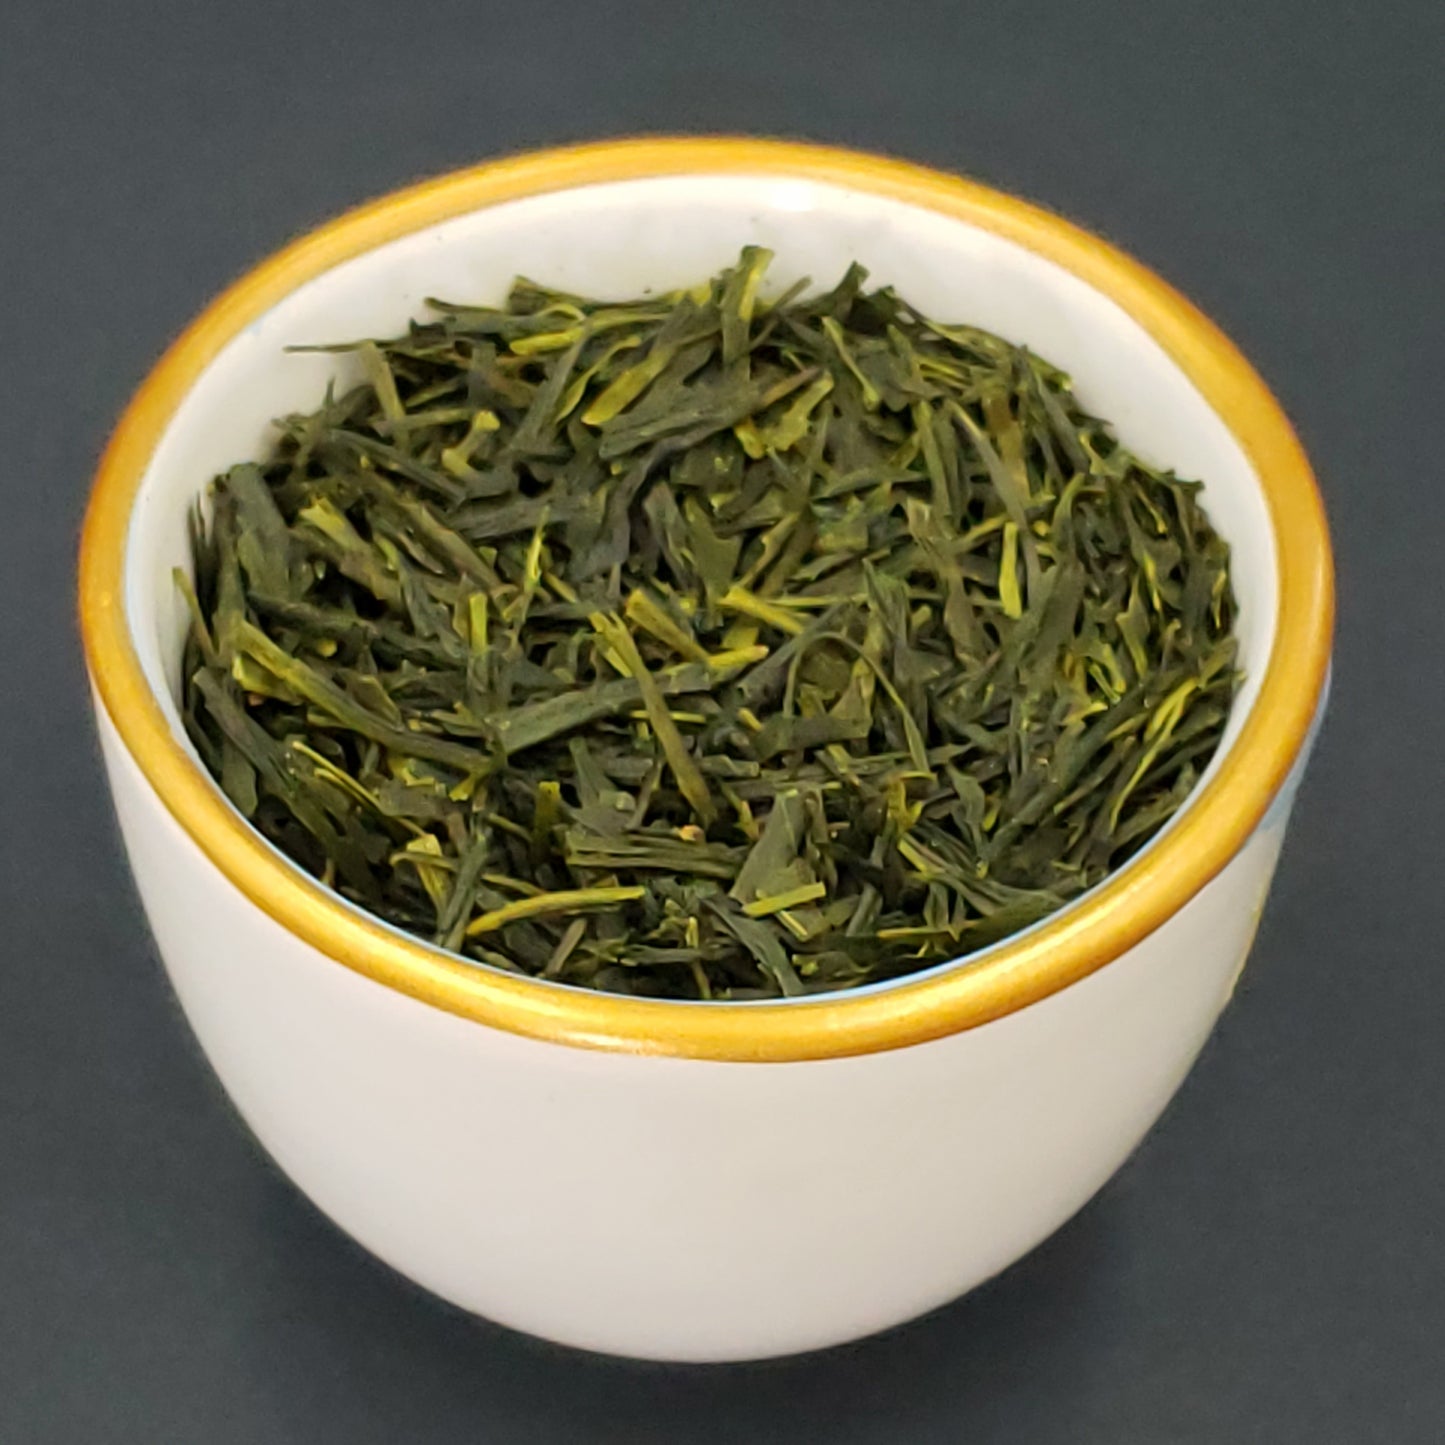 Nateavia Sencha Yabukita - Organic Japanese Loose Leaf Green Tea - First Flush - Authentic Japanese Origin, from Shizuoka - 1Kg